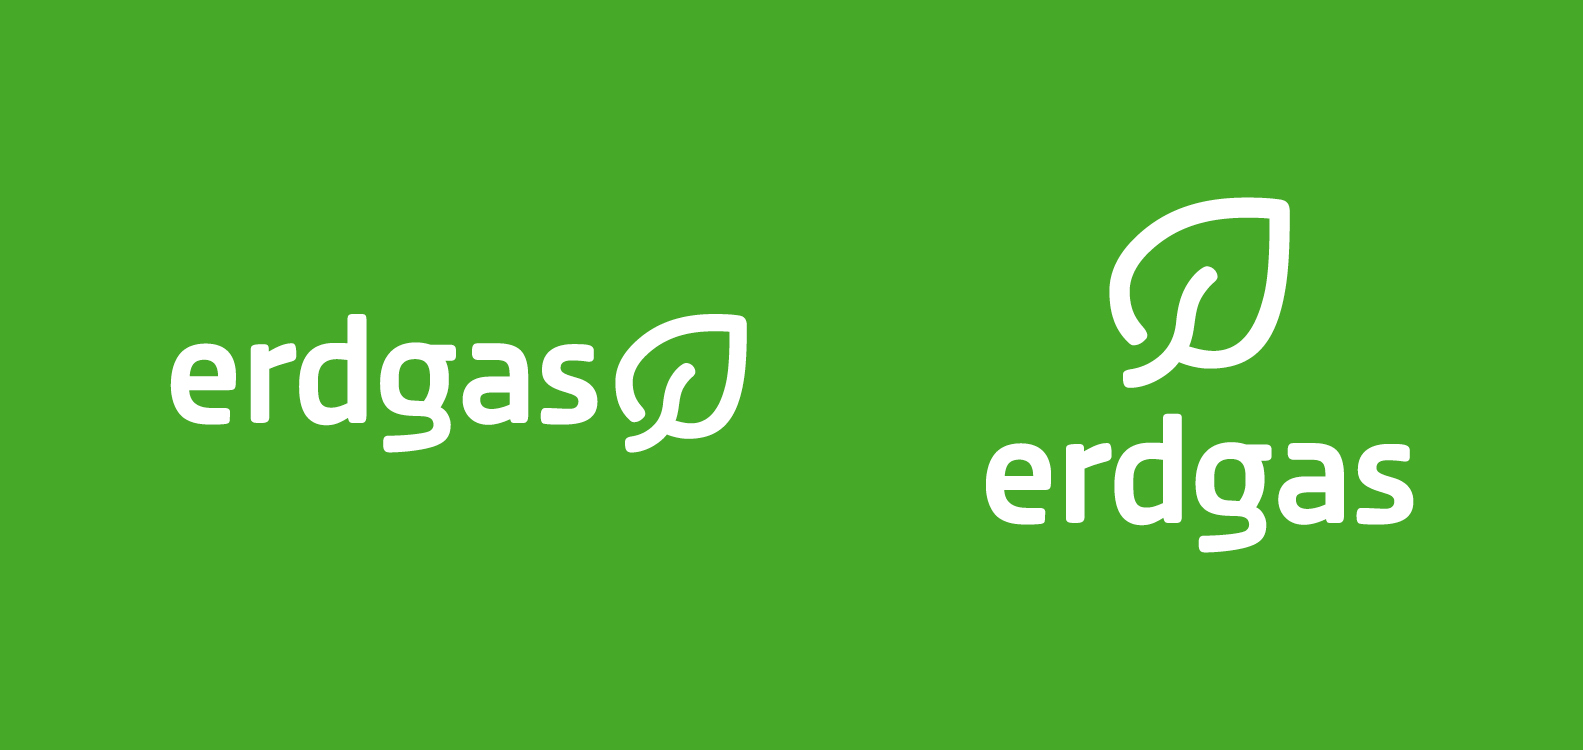 Erdgas_Logo6_weiss